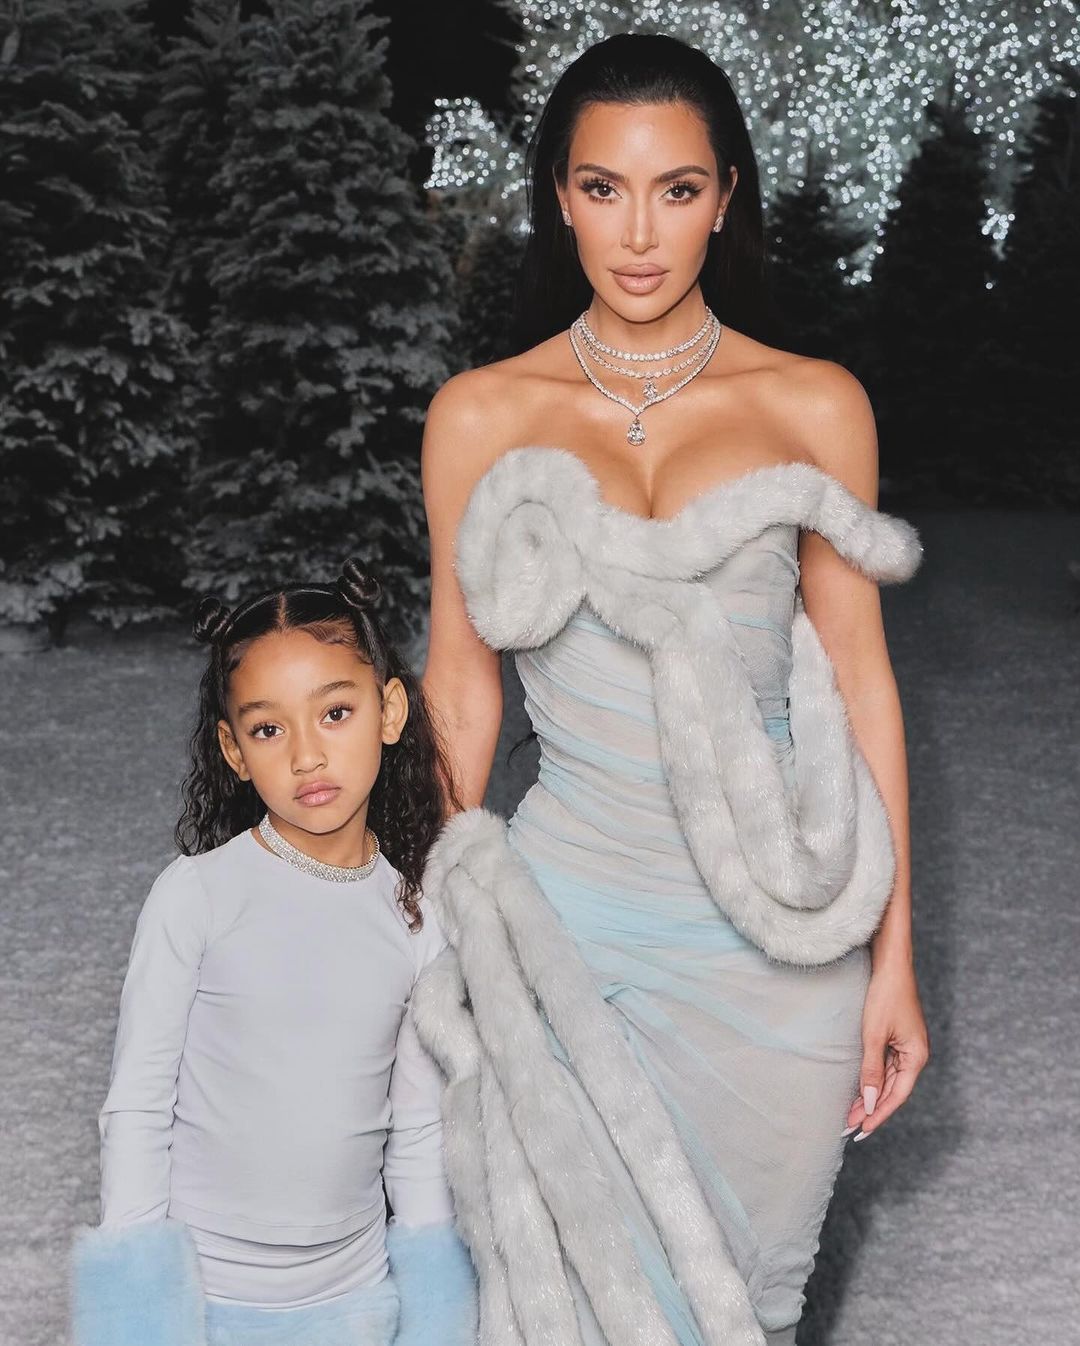 Kim Kardashian with kids at a holiday party